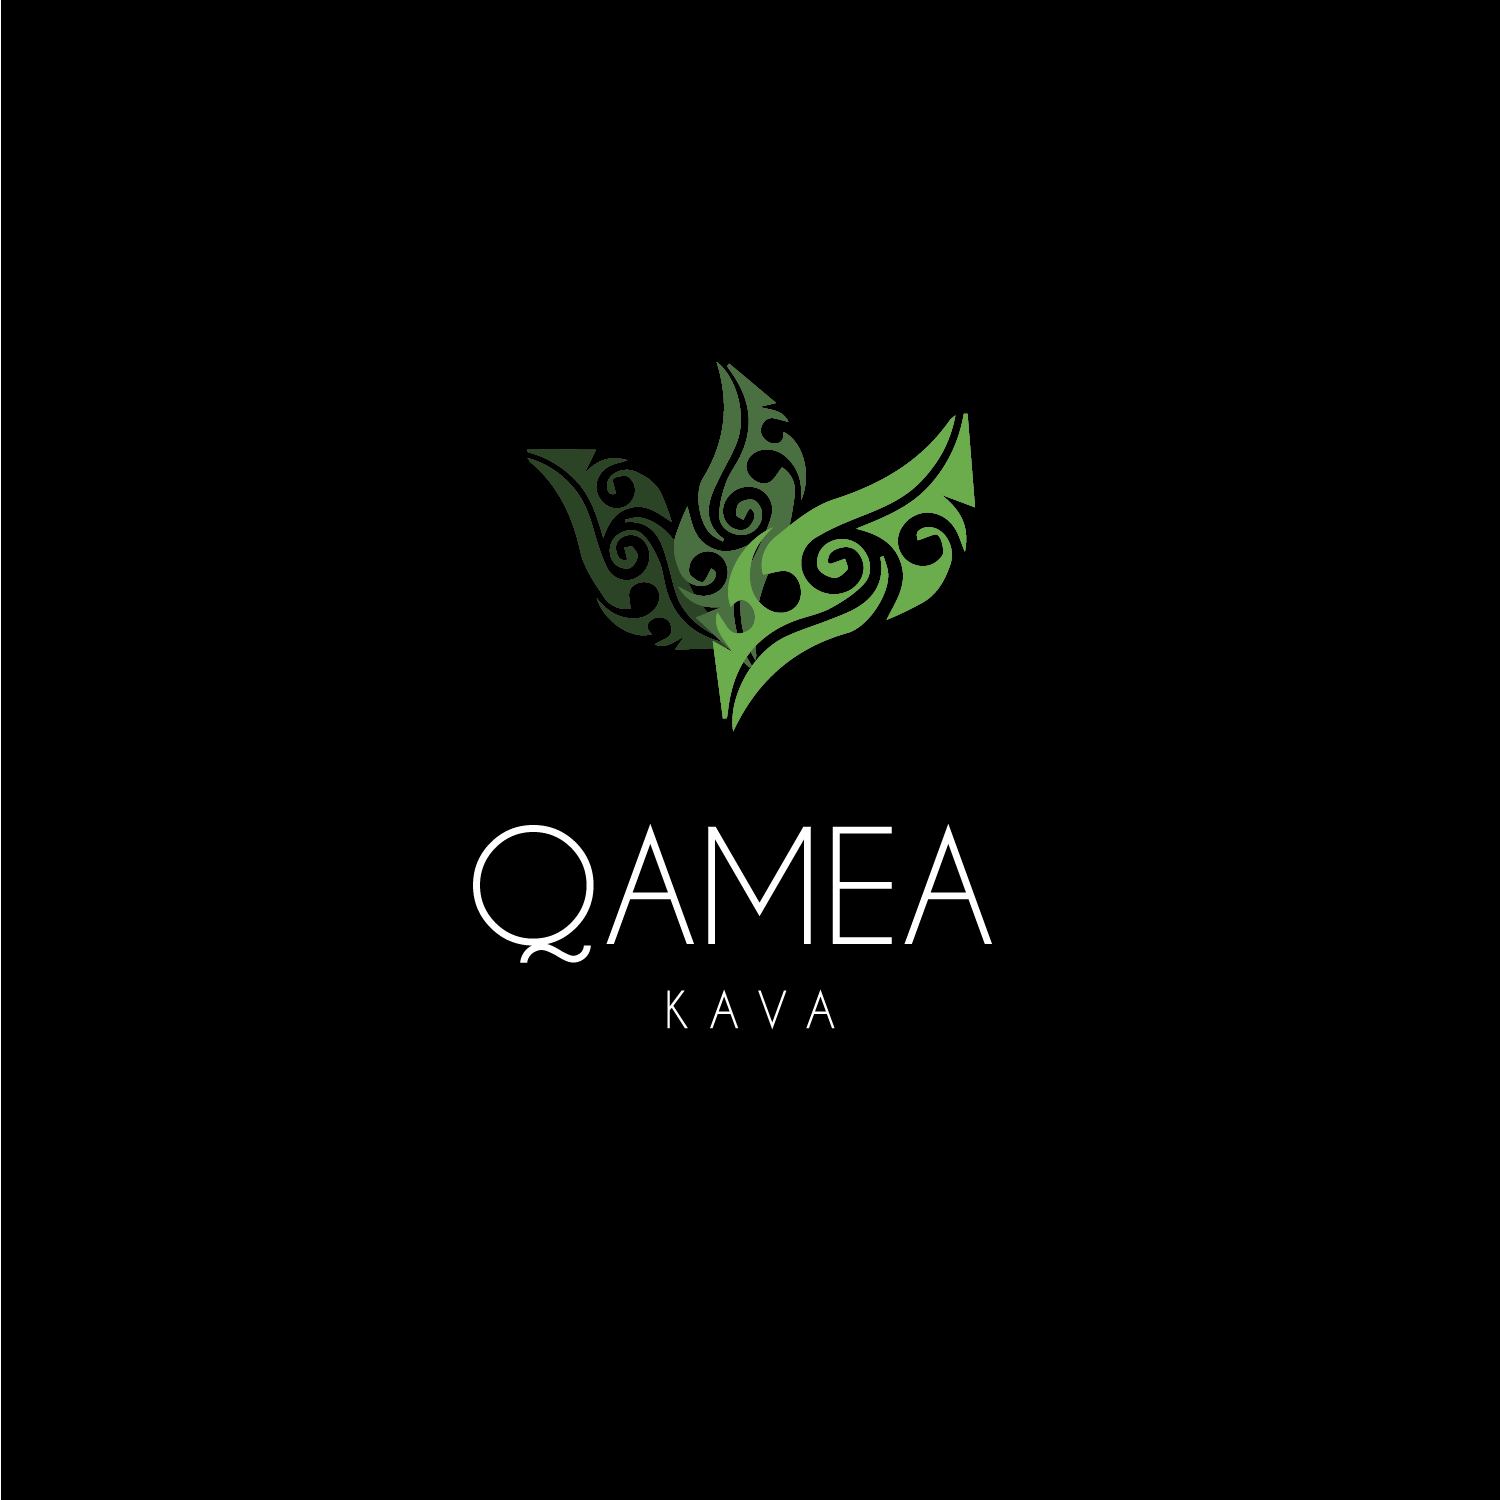 QAMEA_KAVA_LOGO-01.png